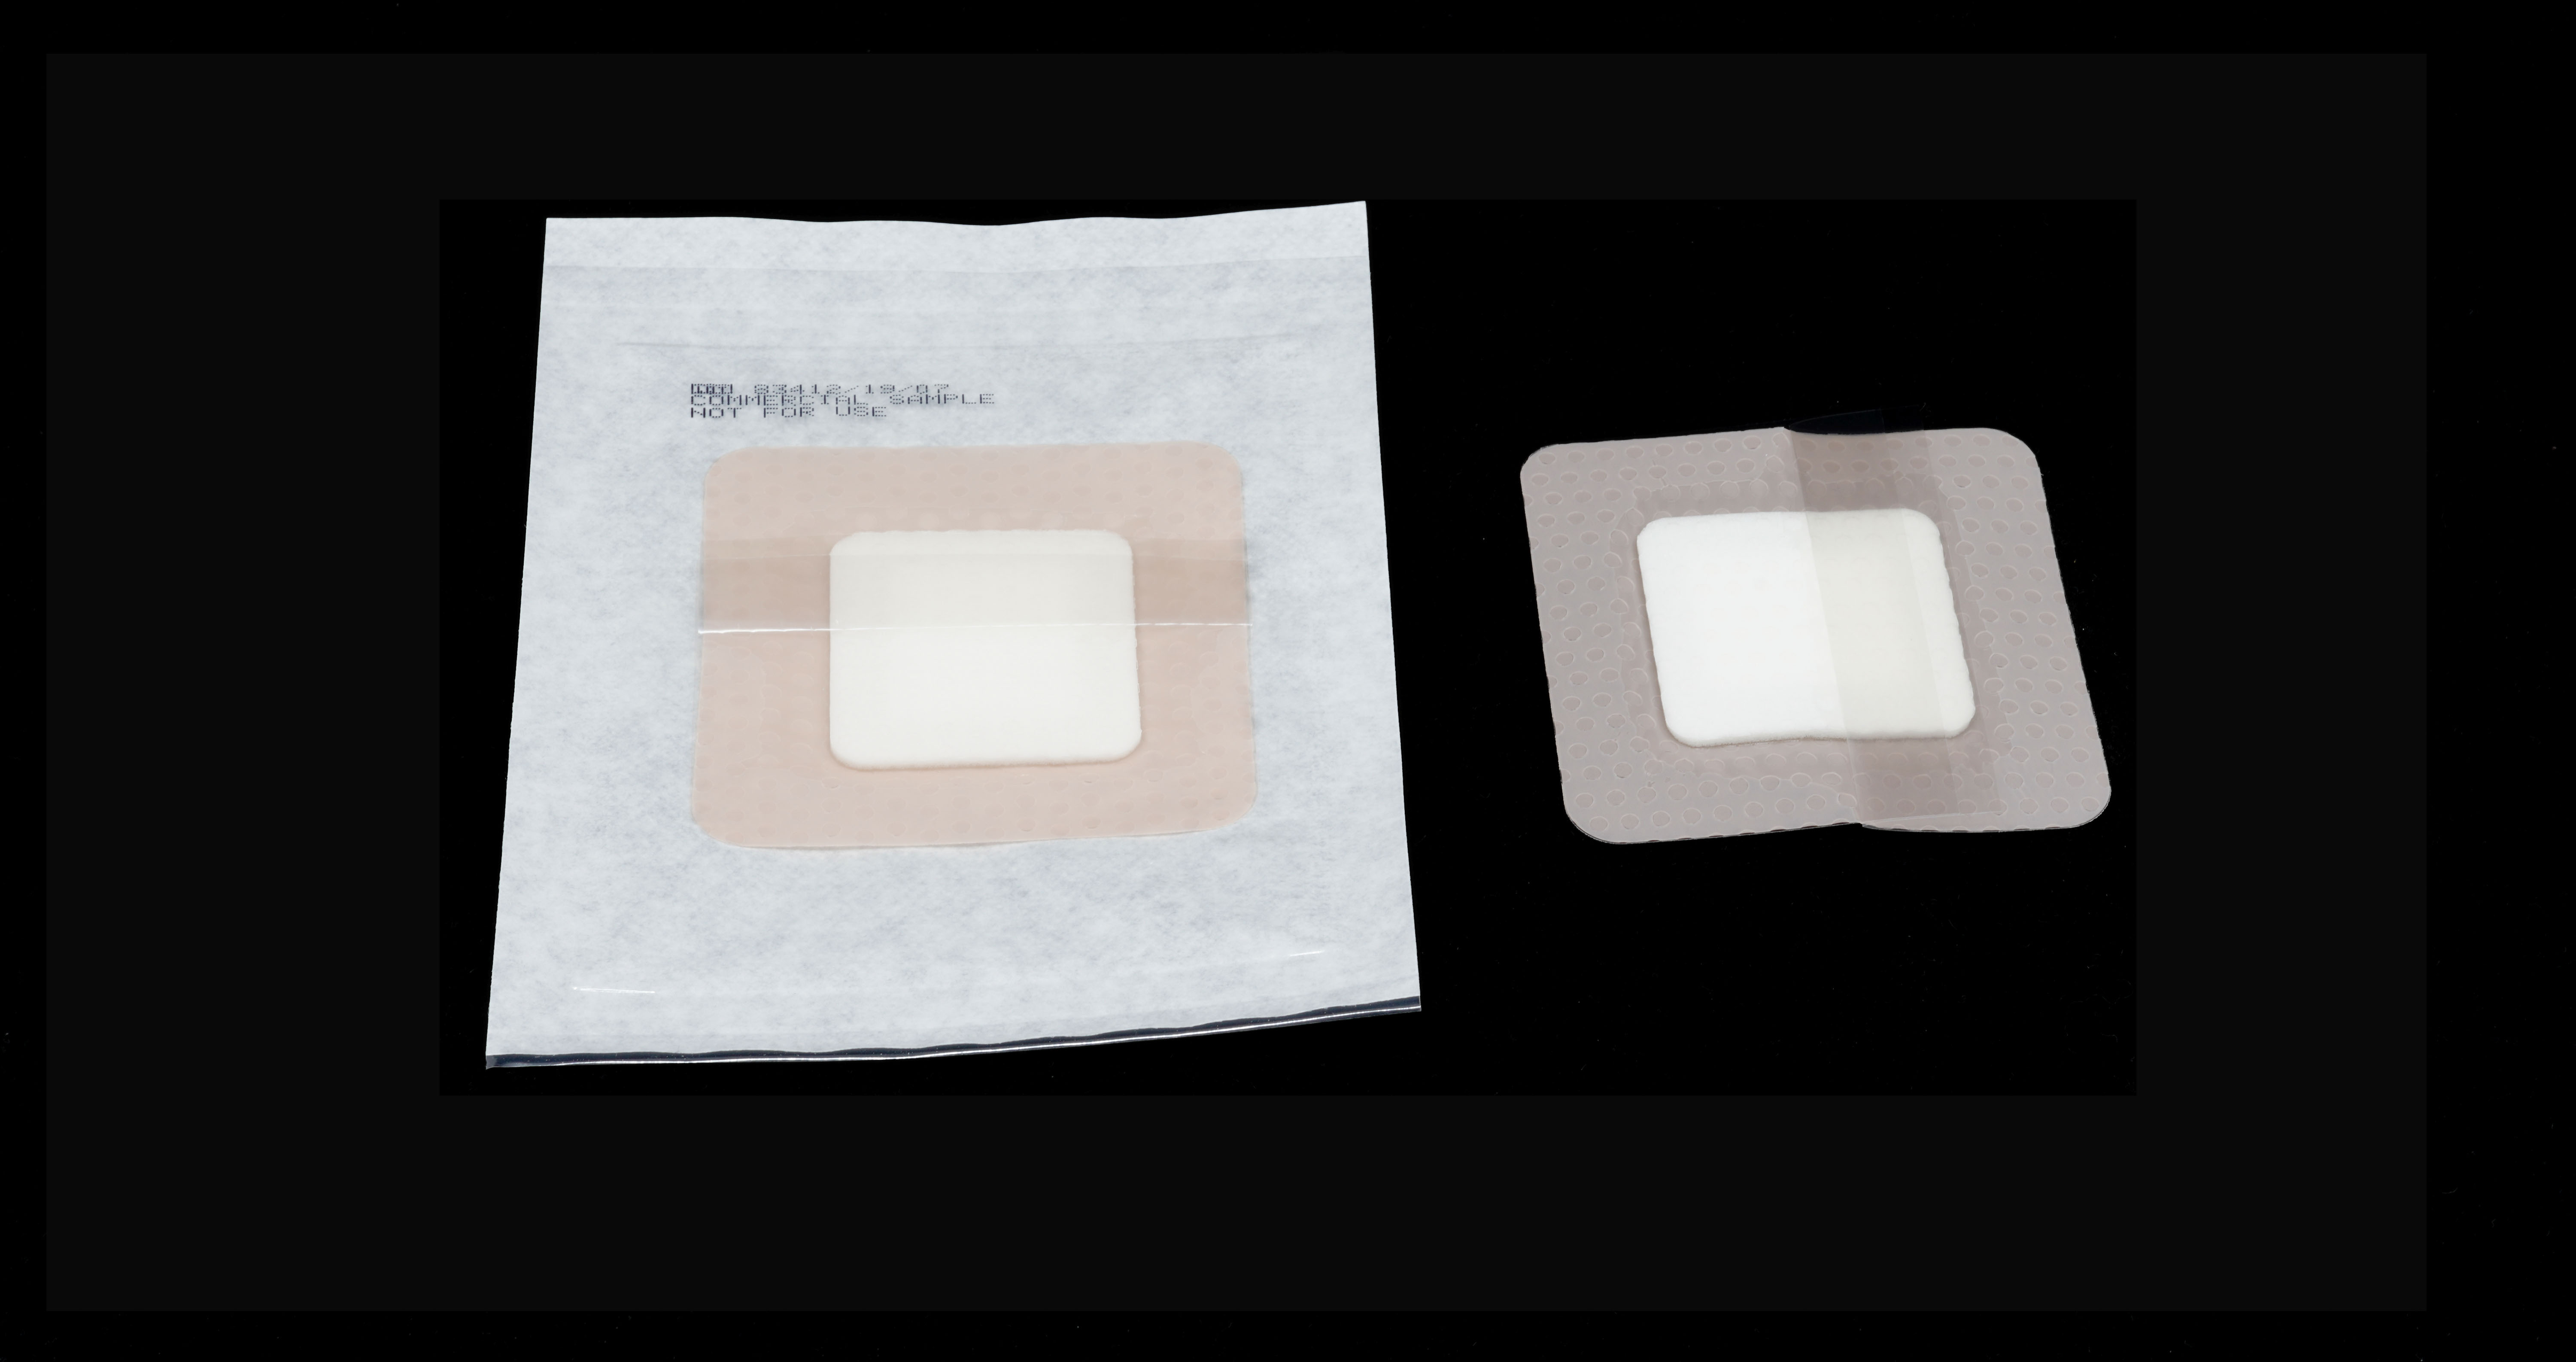 <ul> 	<li>Absorbent dressing for wounds</li> 	<li>Skin-colored polyurethane barrier film&nbsp;</li> 	<li>Customer specified absorbent pad</li> 	<li>Adhesive edge and silicone gel wound interface for atraumatic removal</li> </ul>